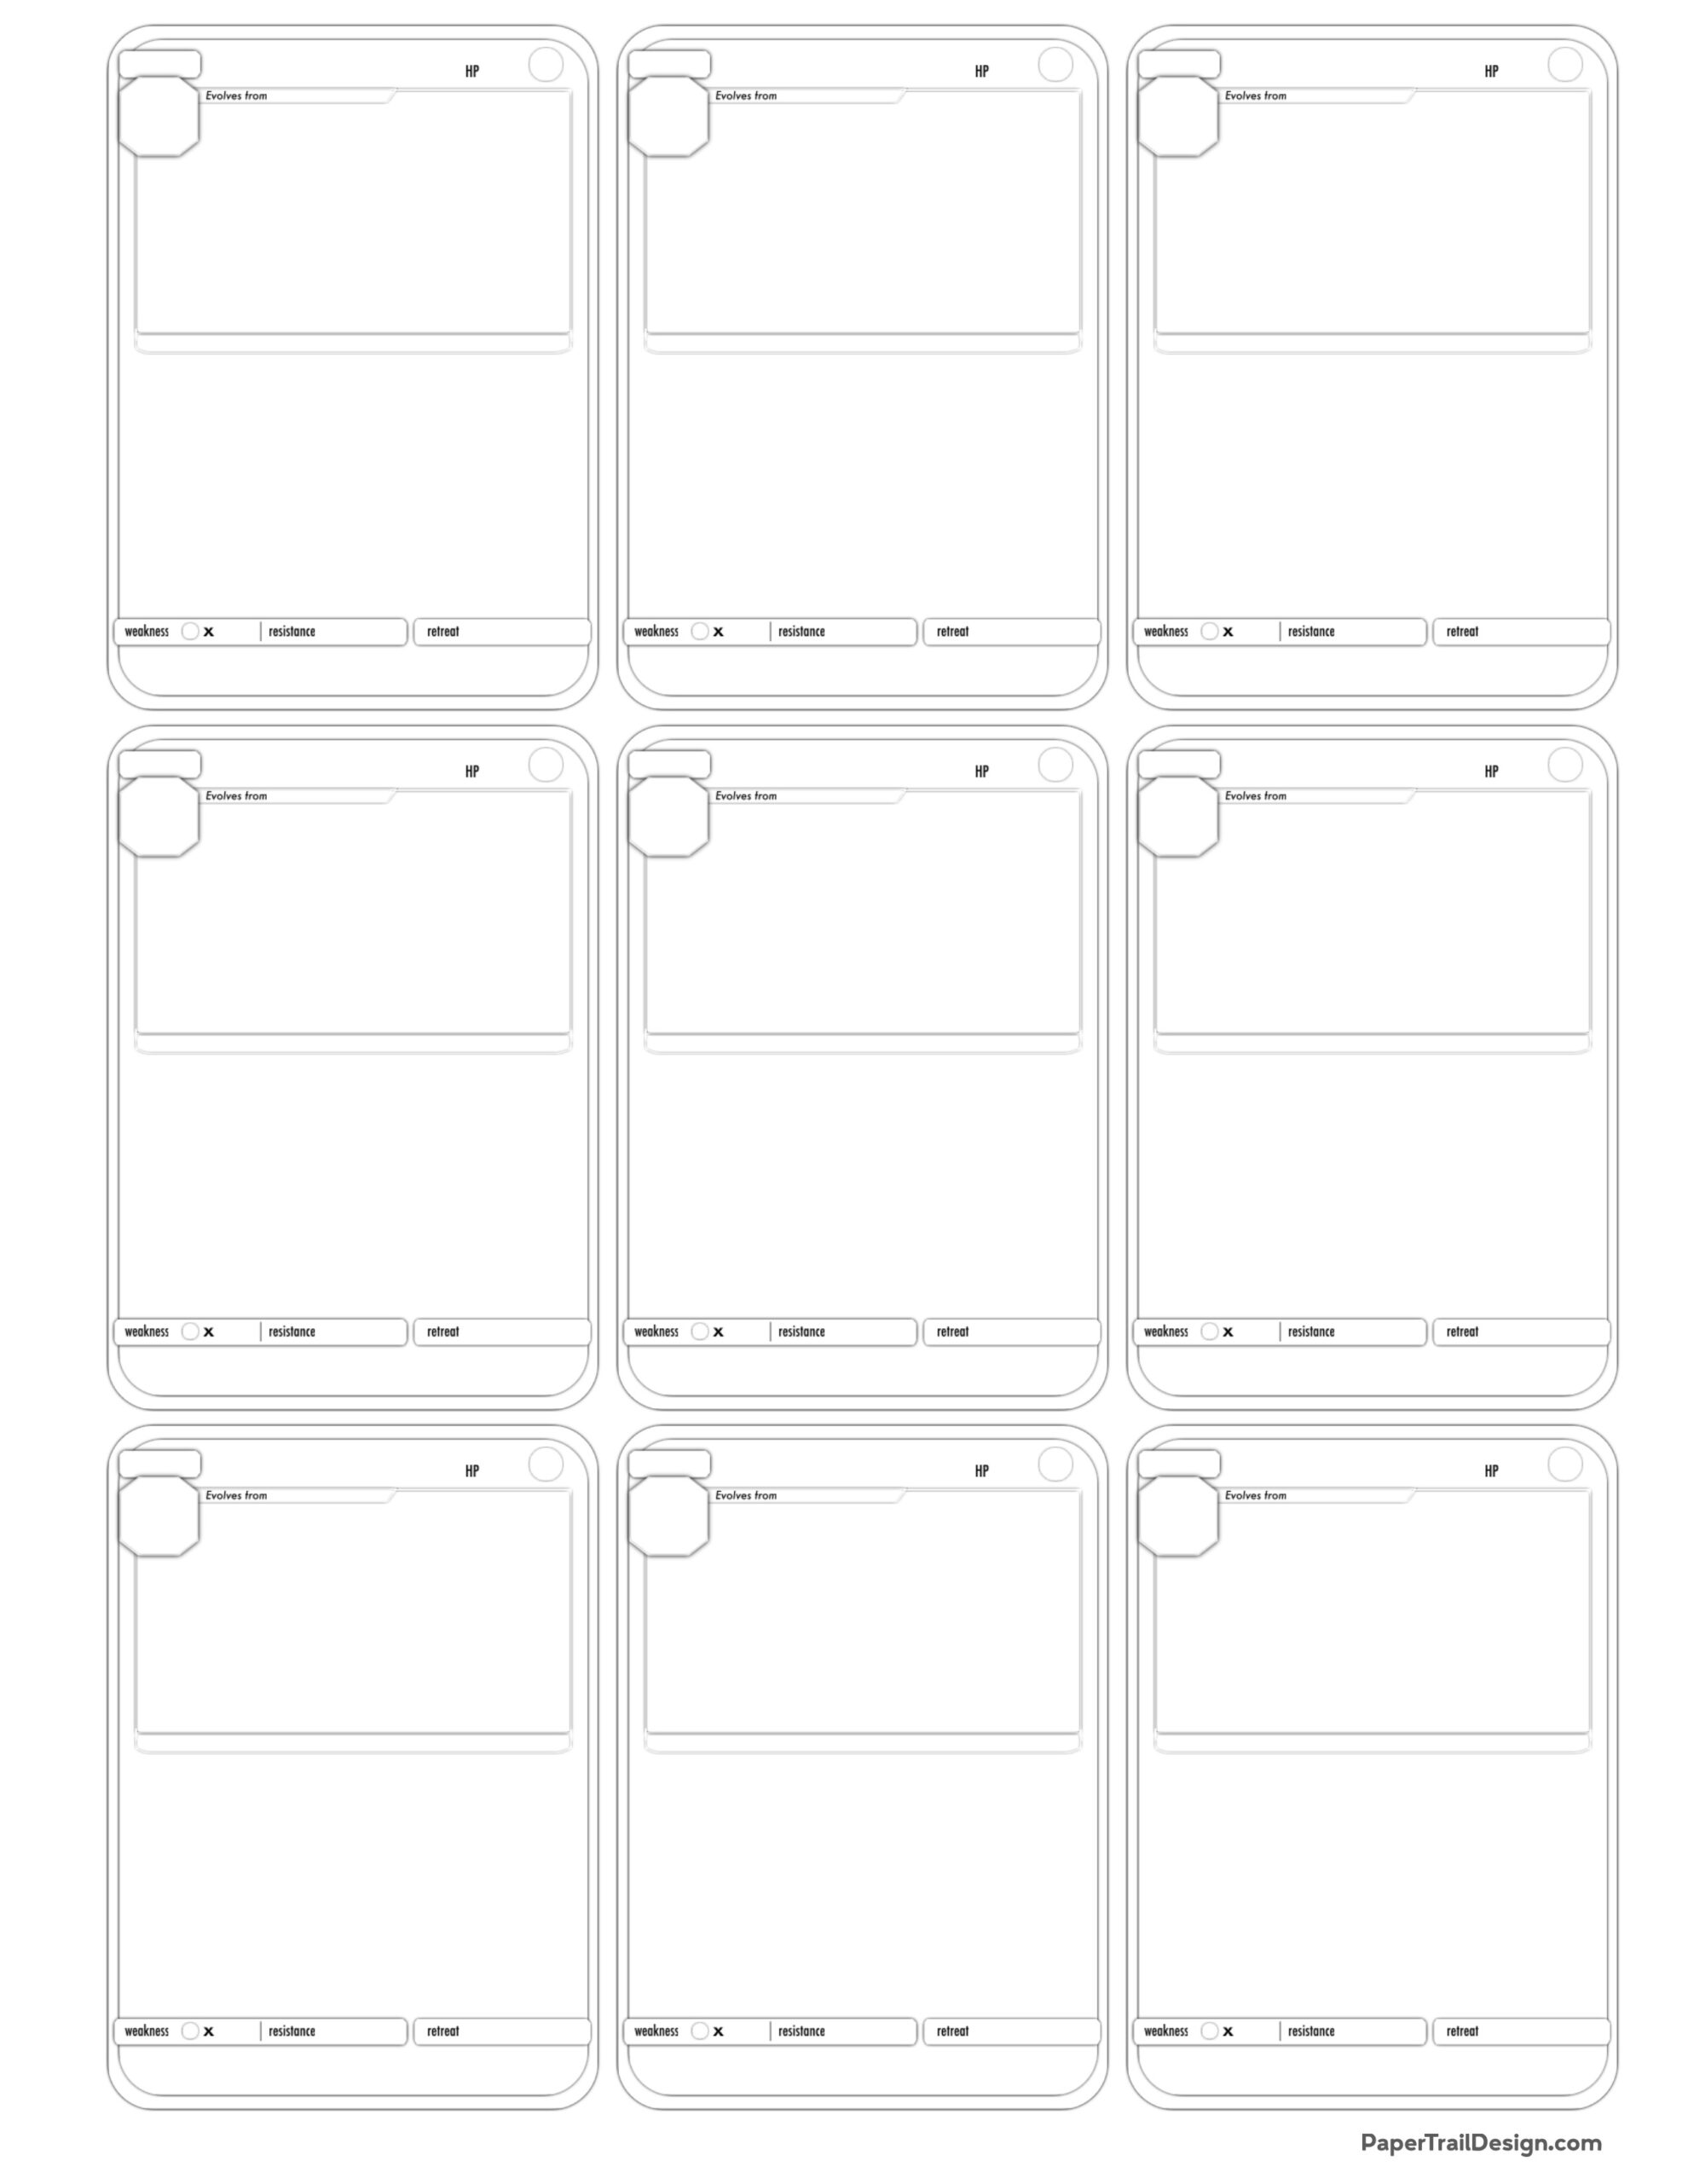 pok-mon-card-template-free-printable-paper-trail-design